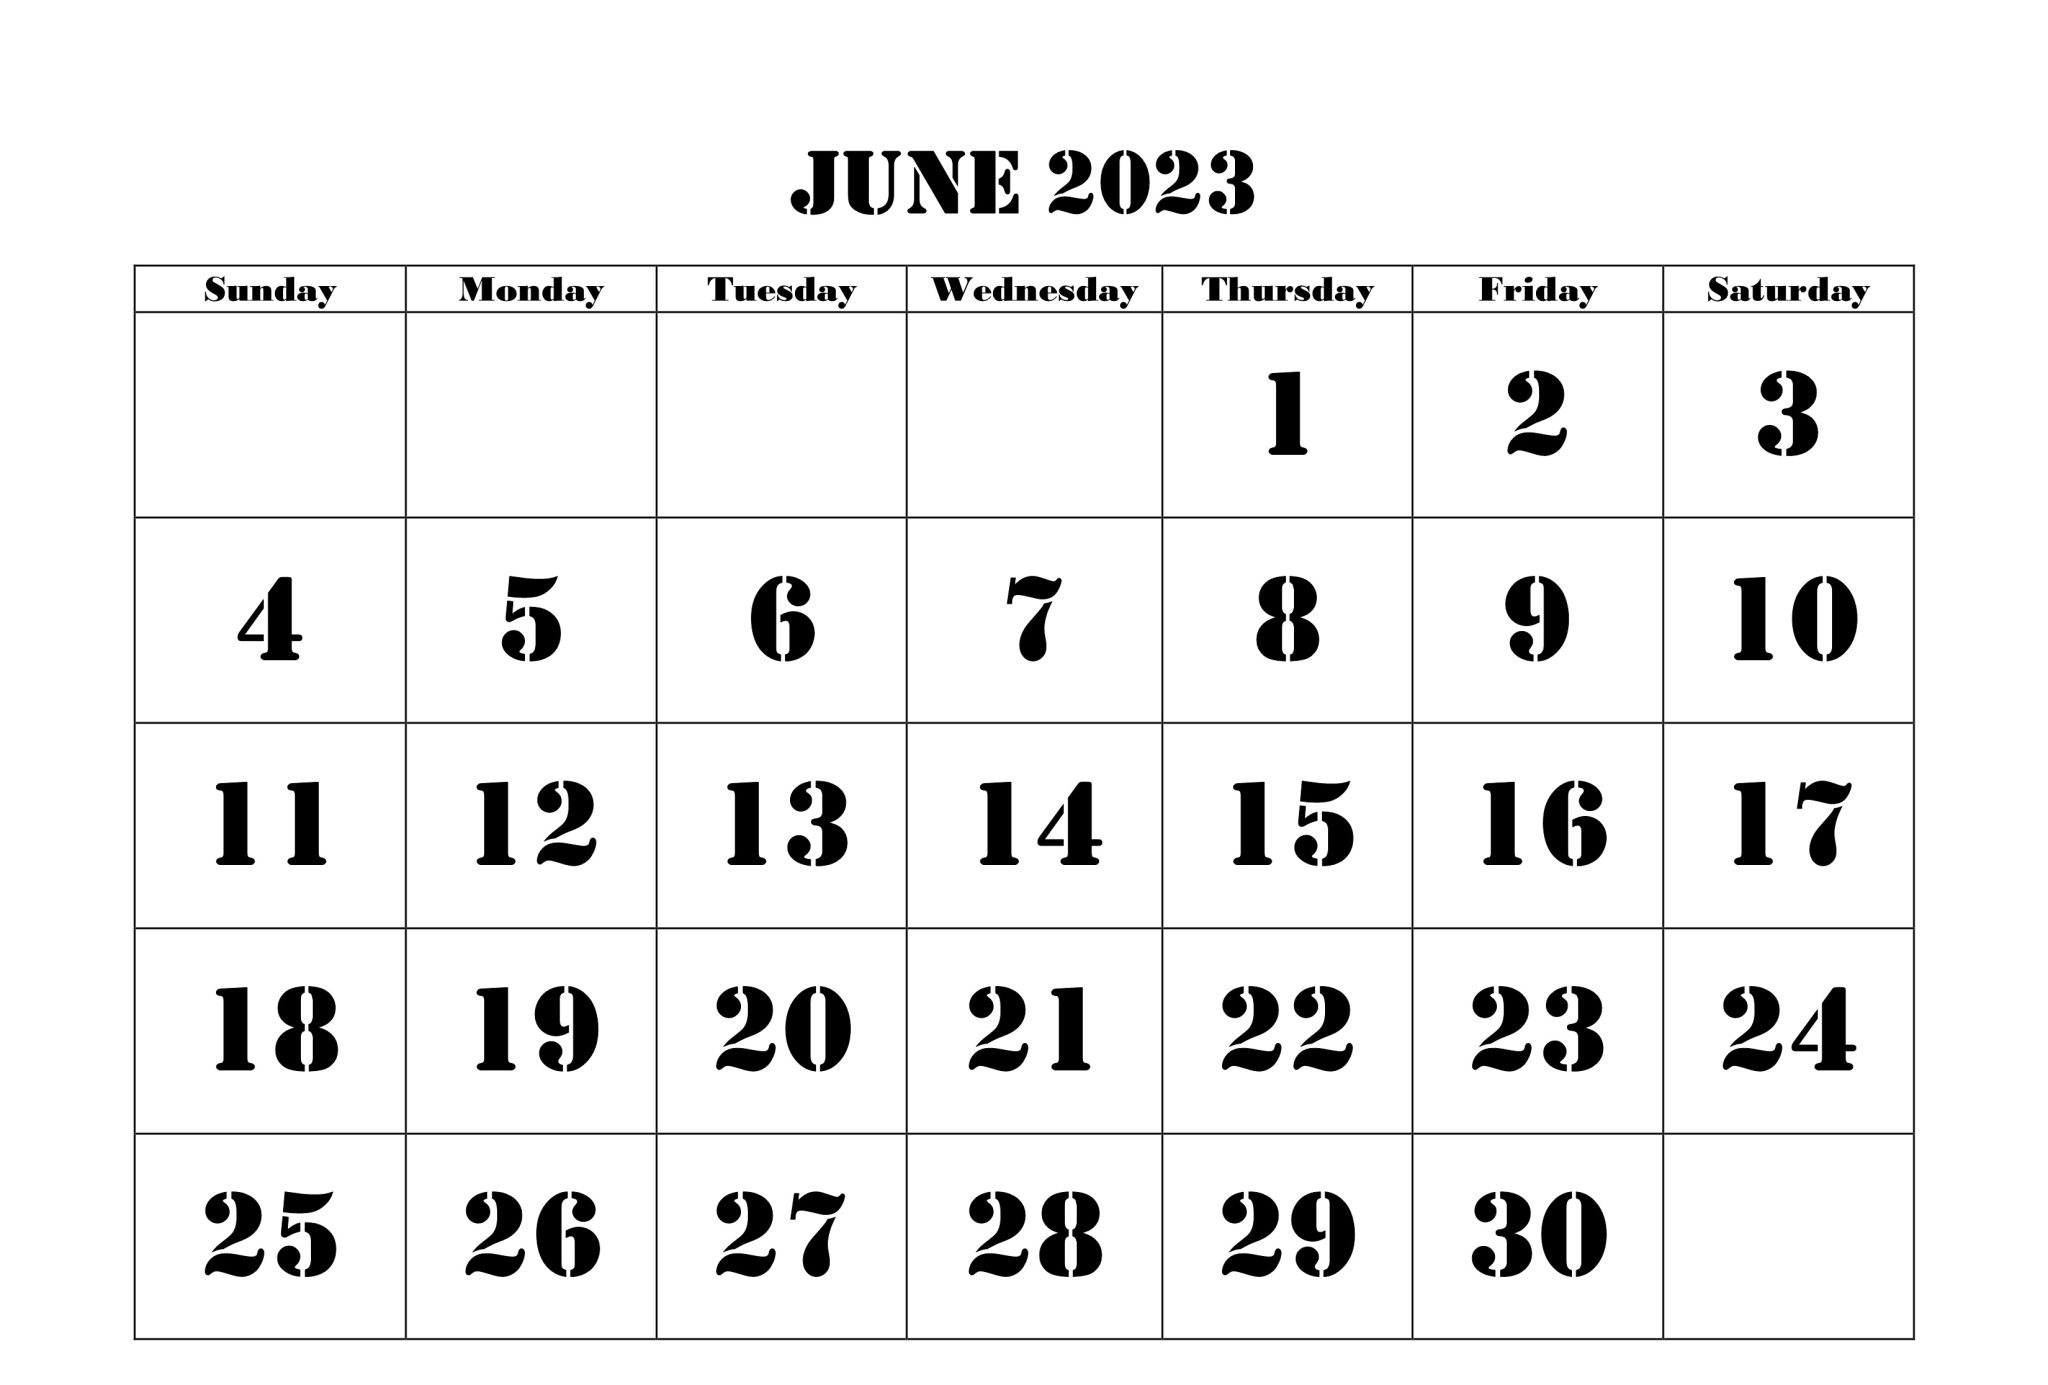 June 2023 Calendar Important Days June 2023 Telugu Calendar June 2023 Good Days Calendar Telugu